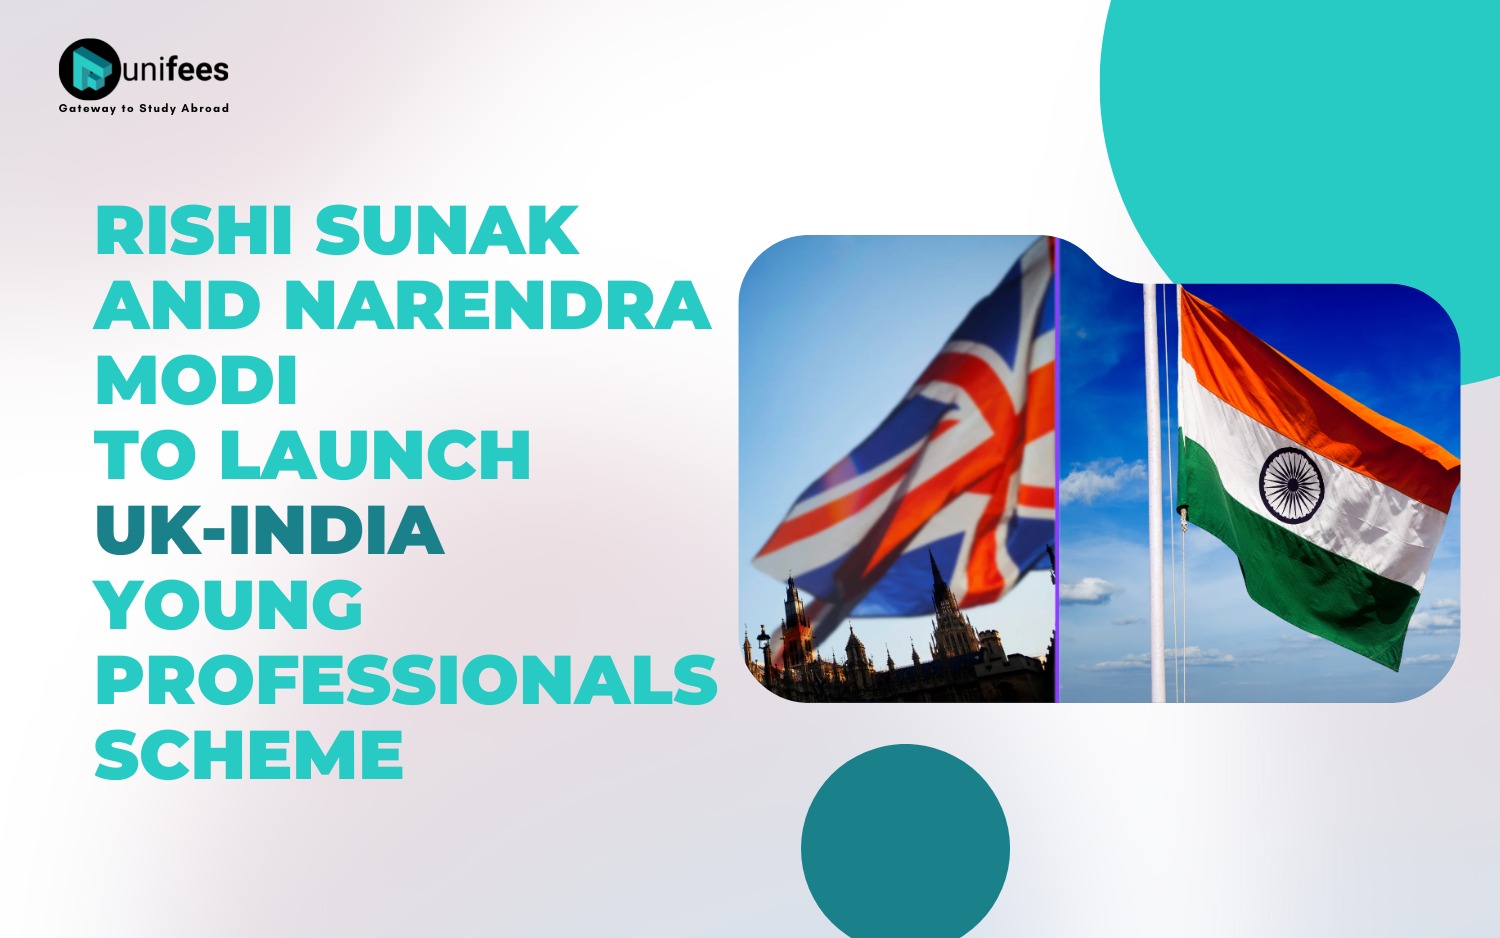 Rishi Sunak and Narendra Modi to launch UK-India Young Professionals Scheme